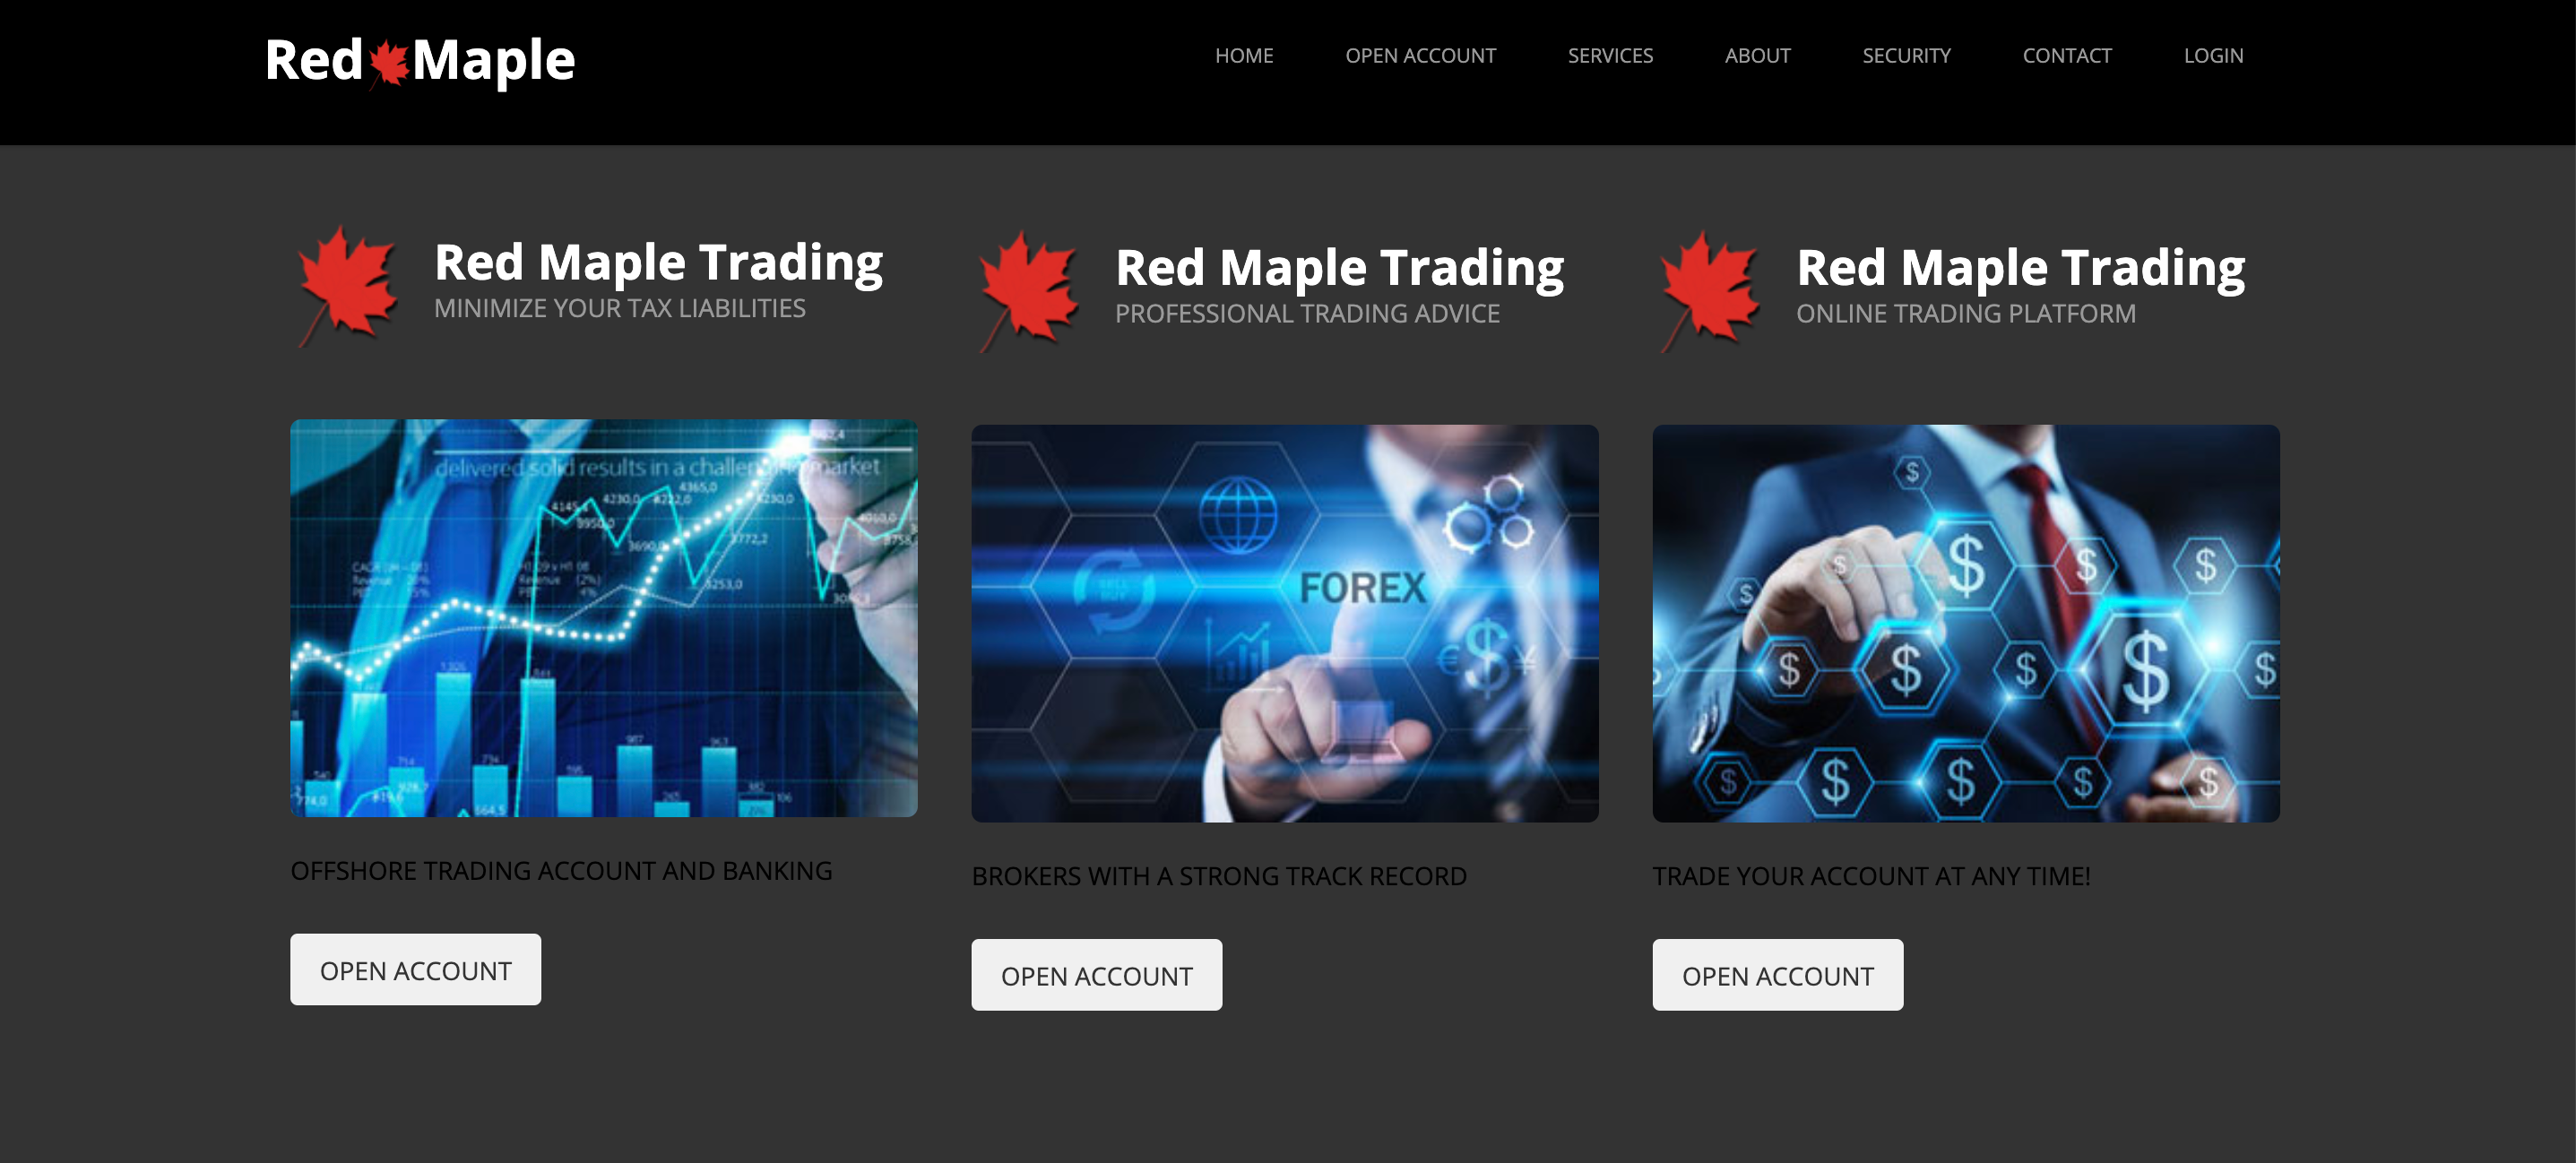 Red Maple website